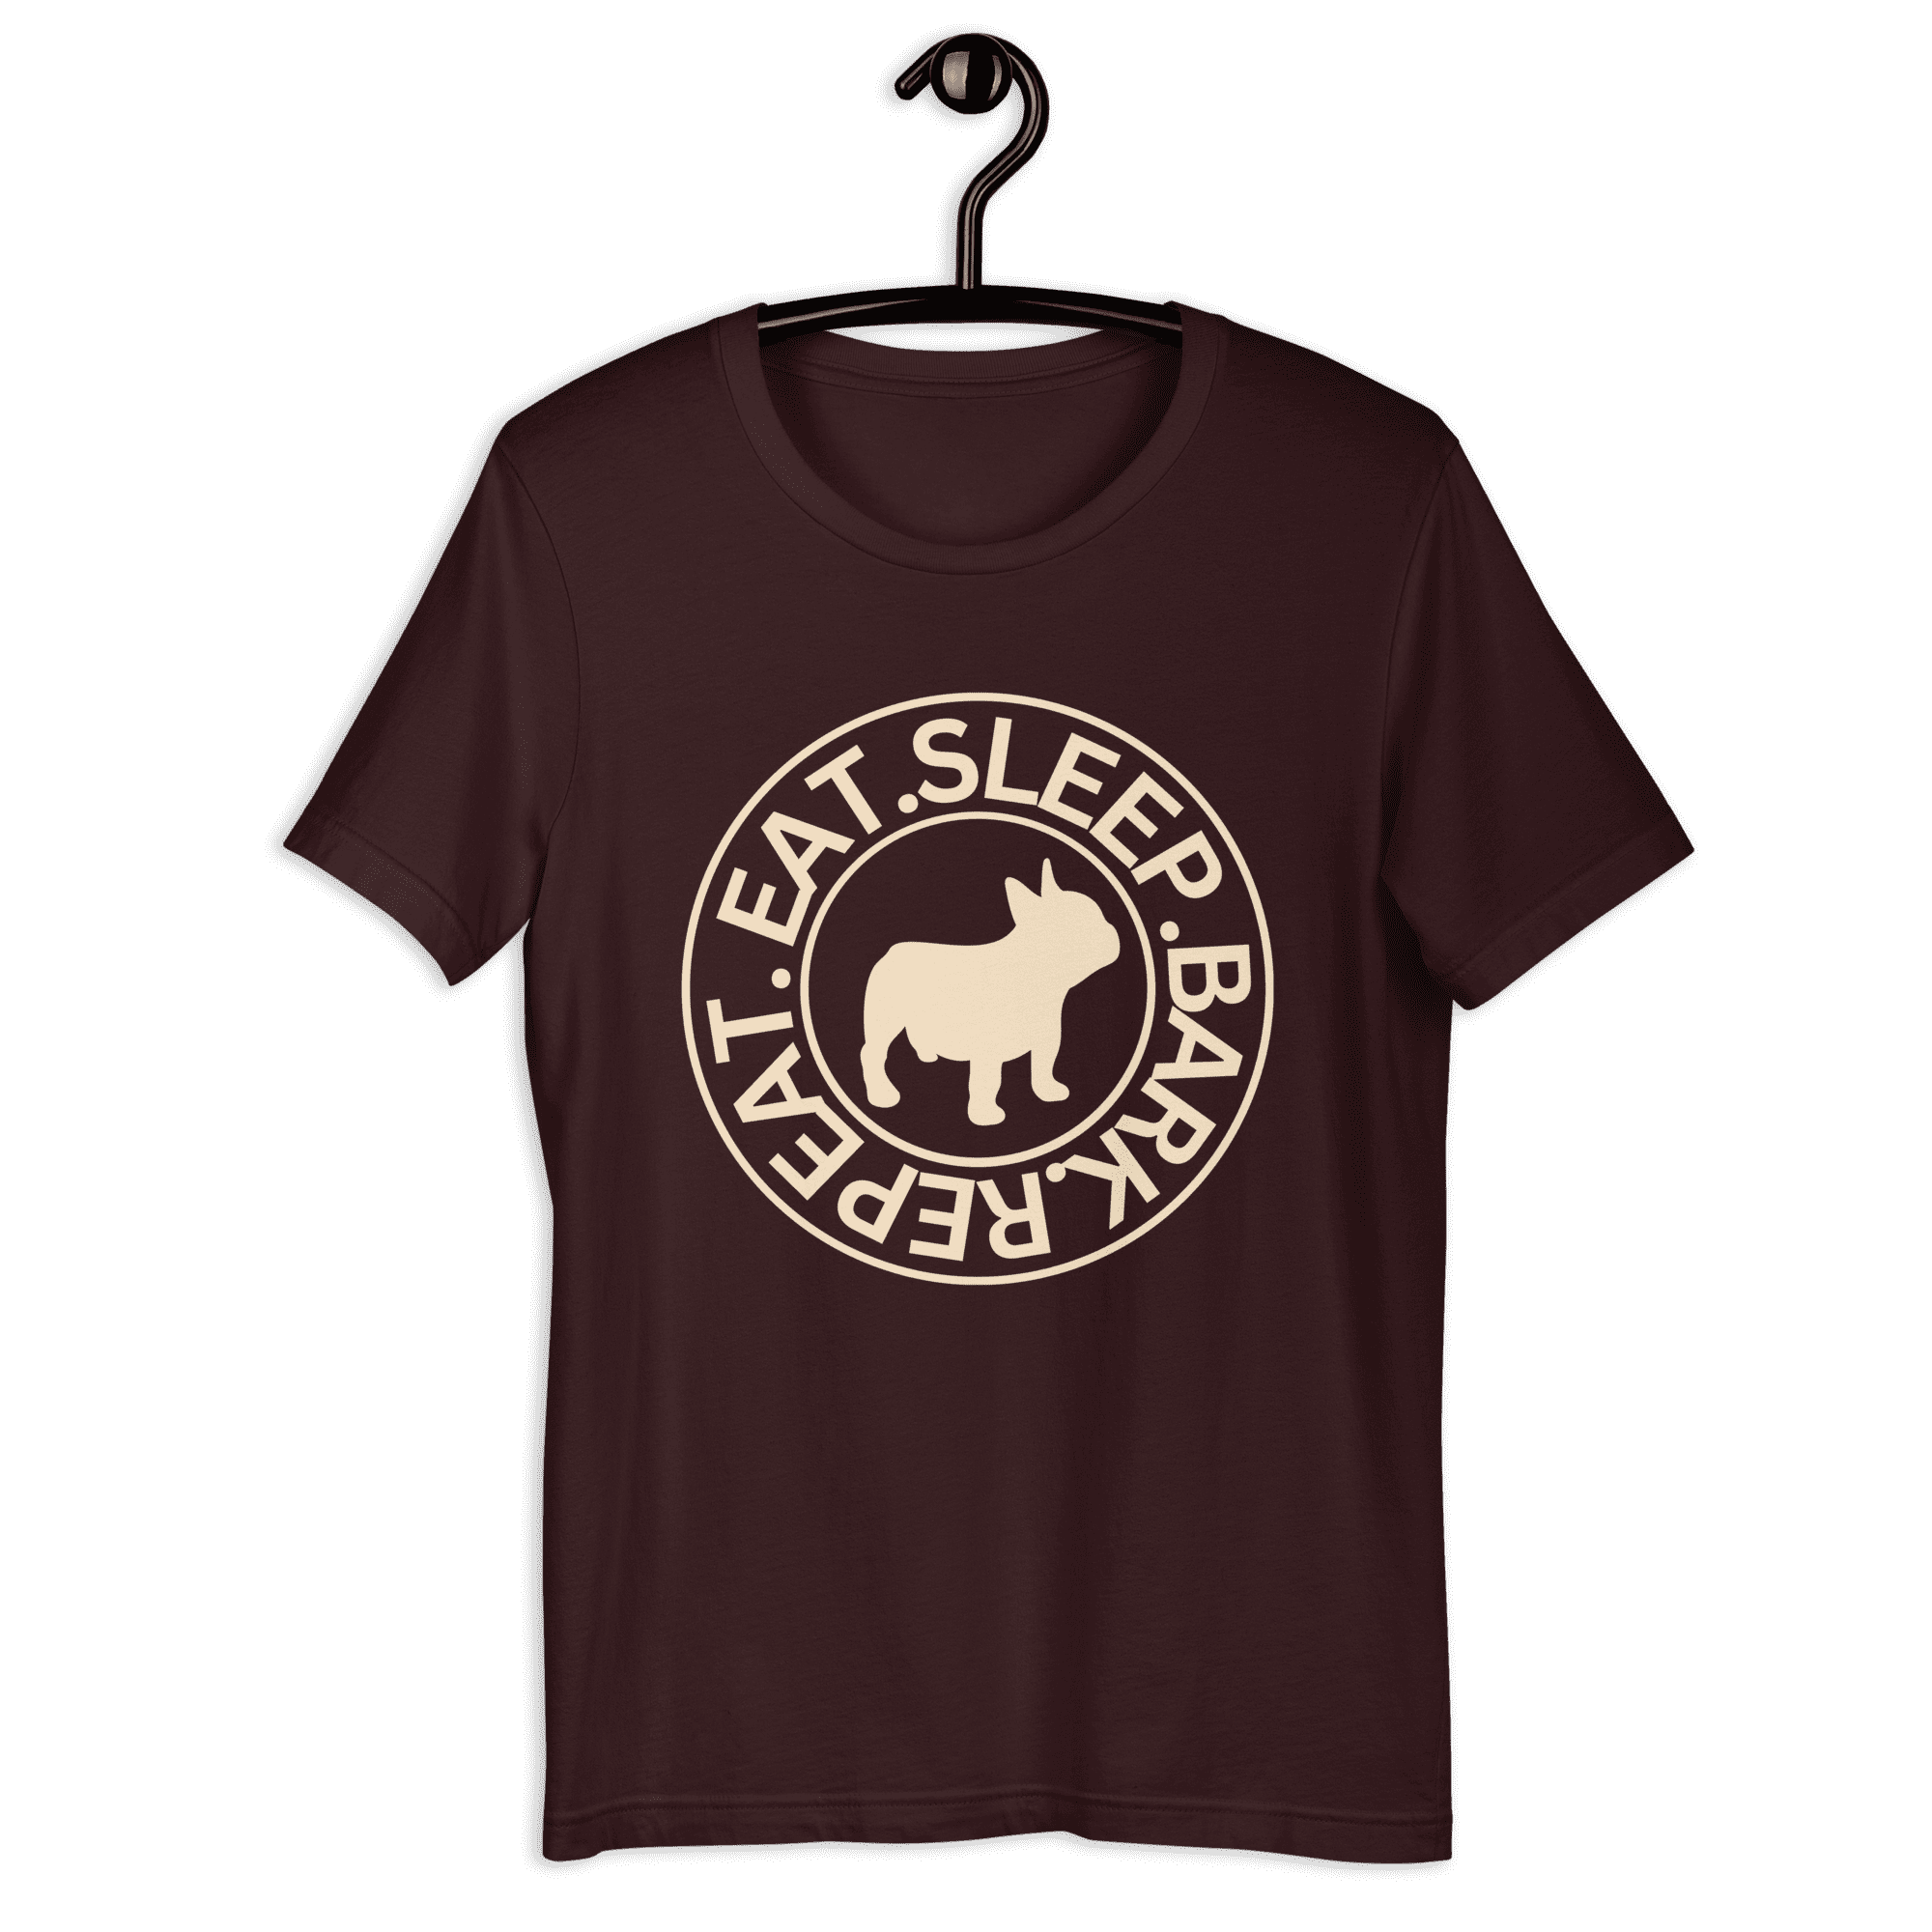 The "Eat Sleep Bark Repeat" French Bulldog Unisex T-Shirt. Ox Blood